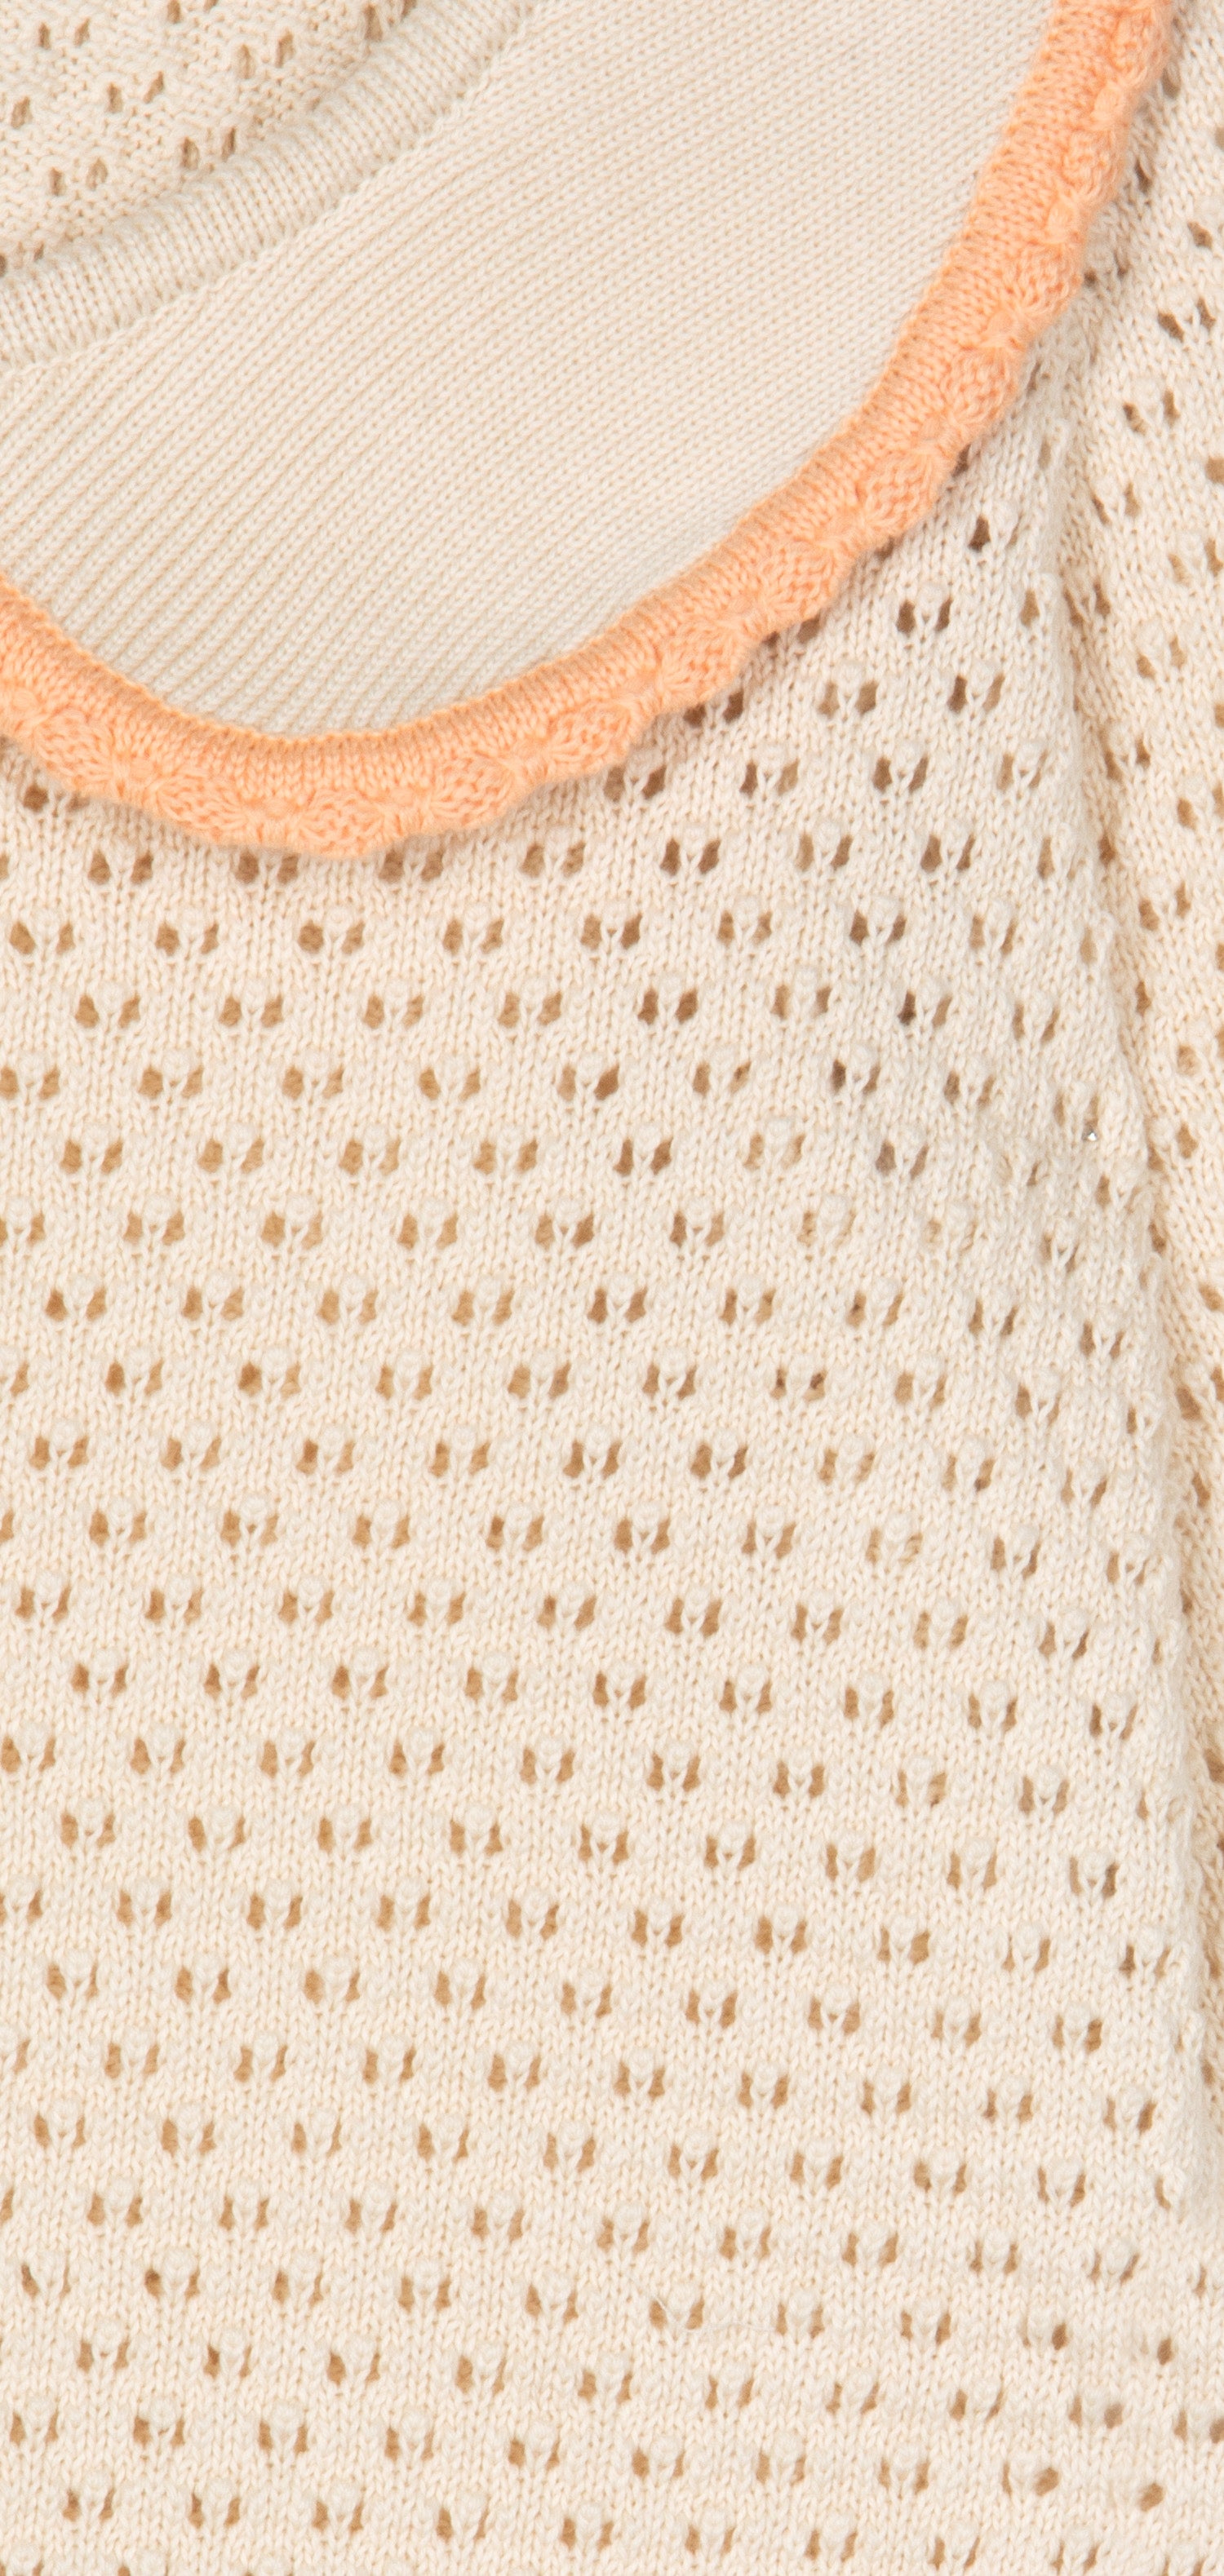 Mipounet - carola collared openwork sweater